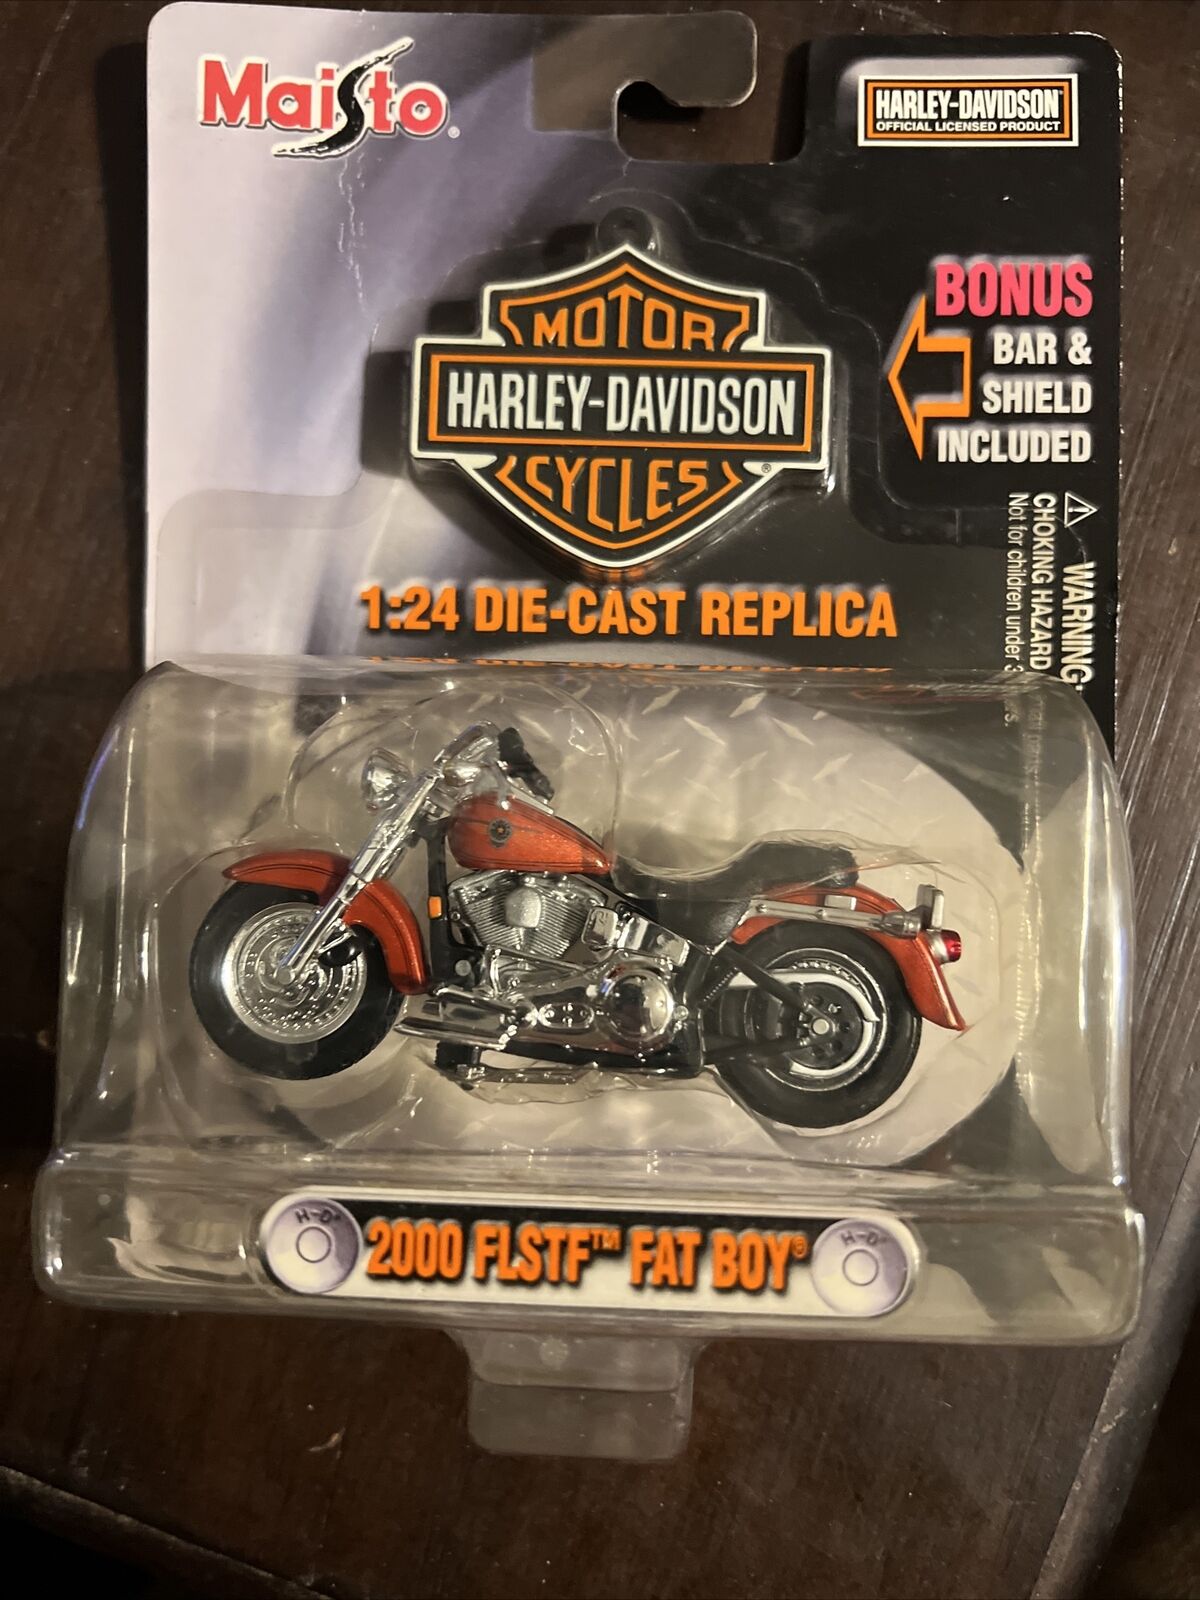 Harley Davidson Maisto 1:24 Die Cast Replica With Bonus Bar and Shield Included